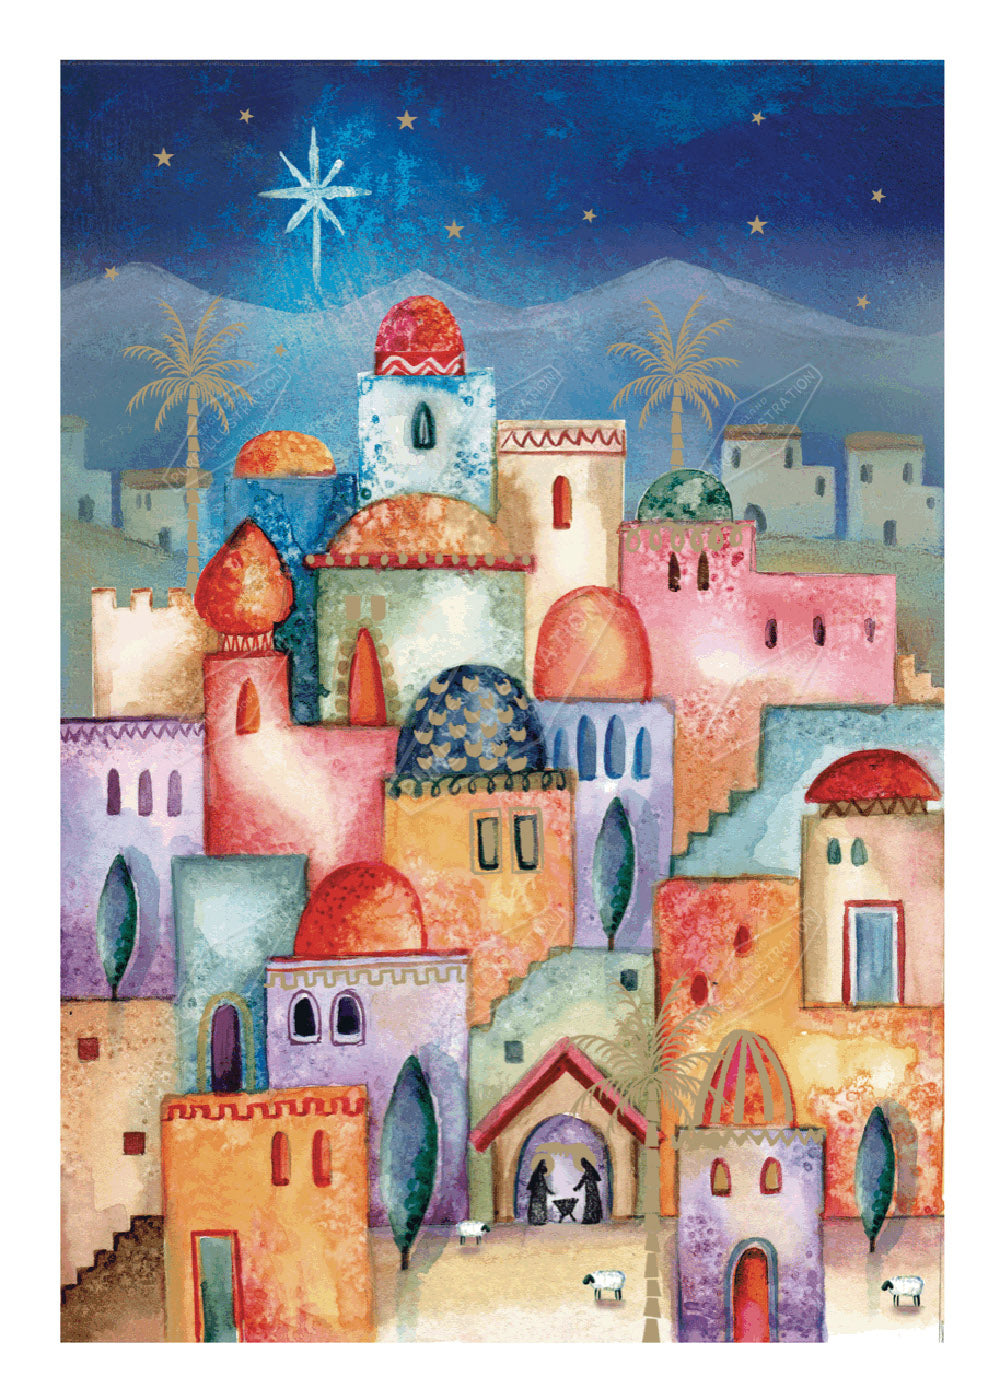 00033420DEV - Deva Evans is represented by Pure Art Licensing Agency - Christmas Greeting Card Design